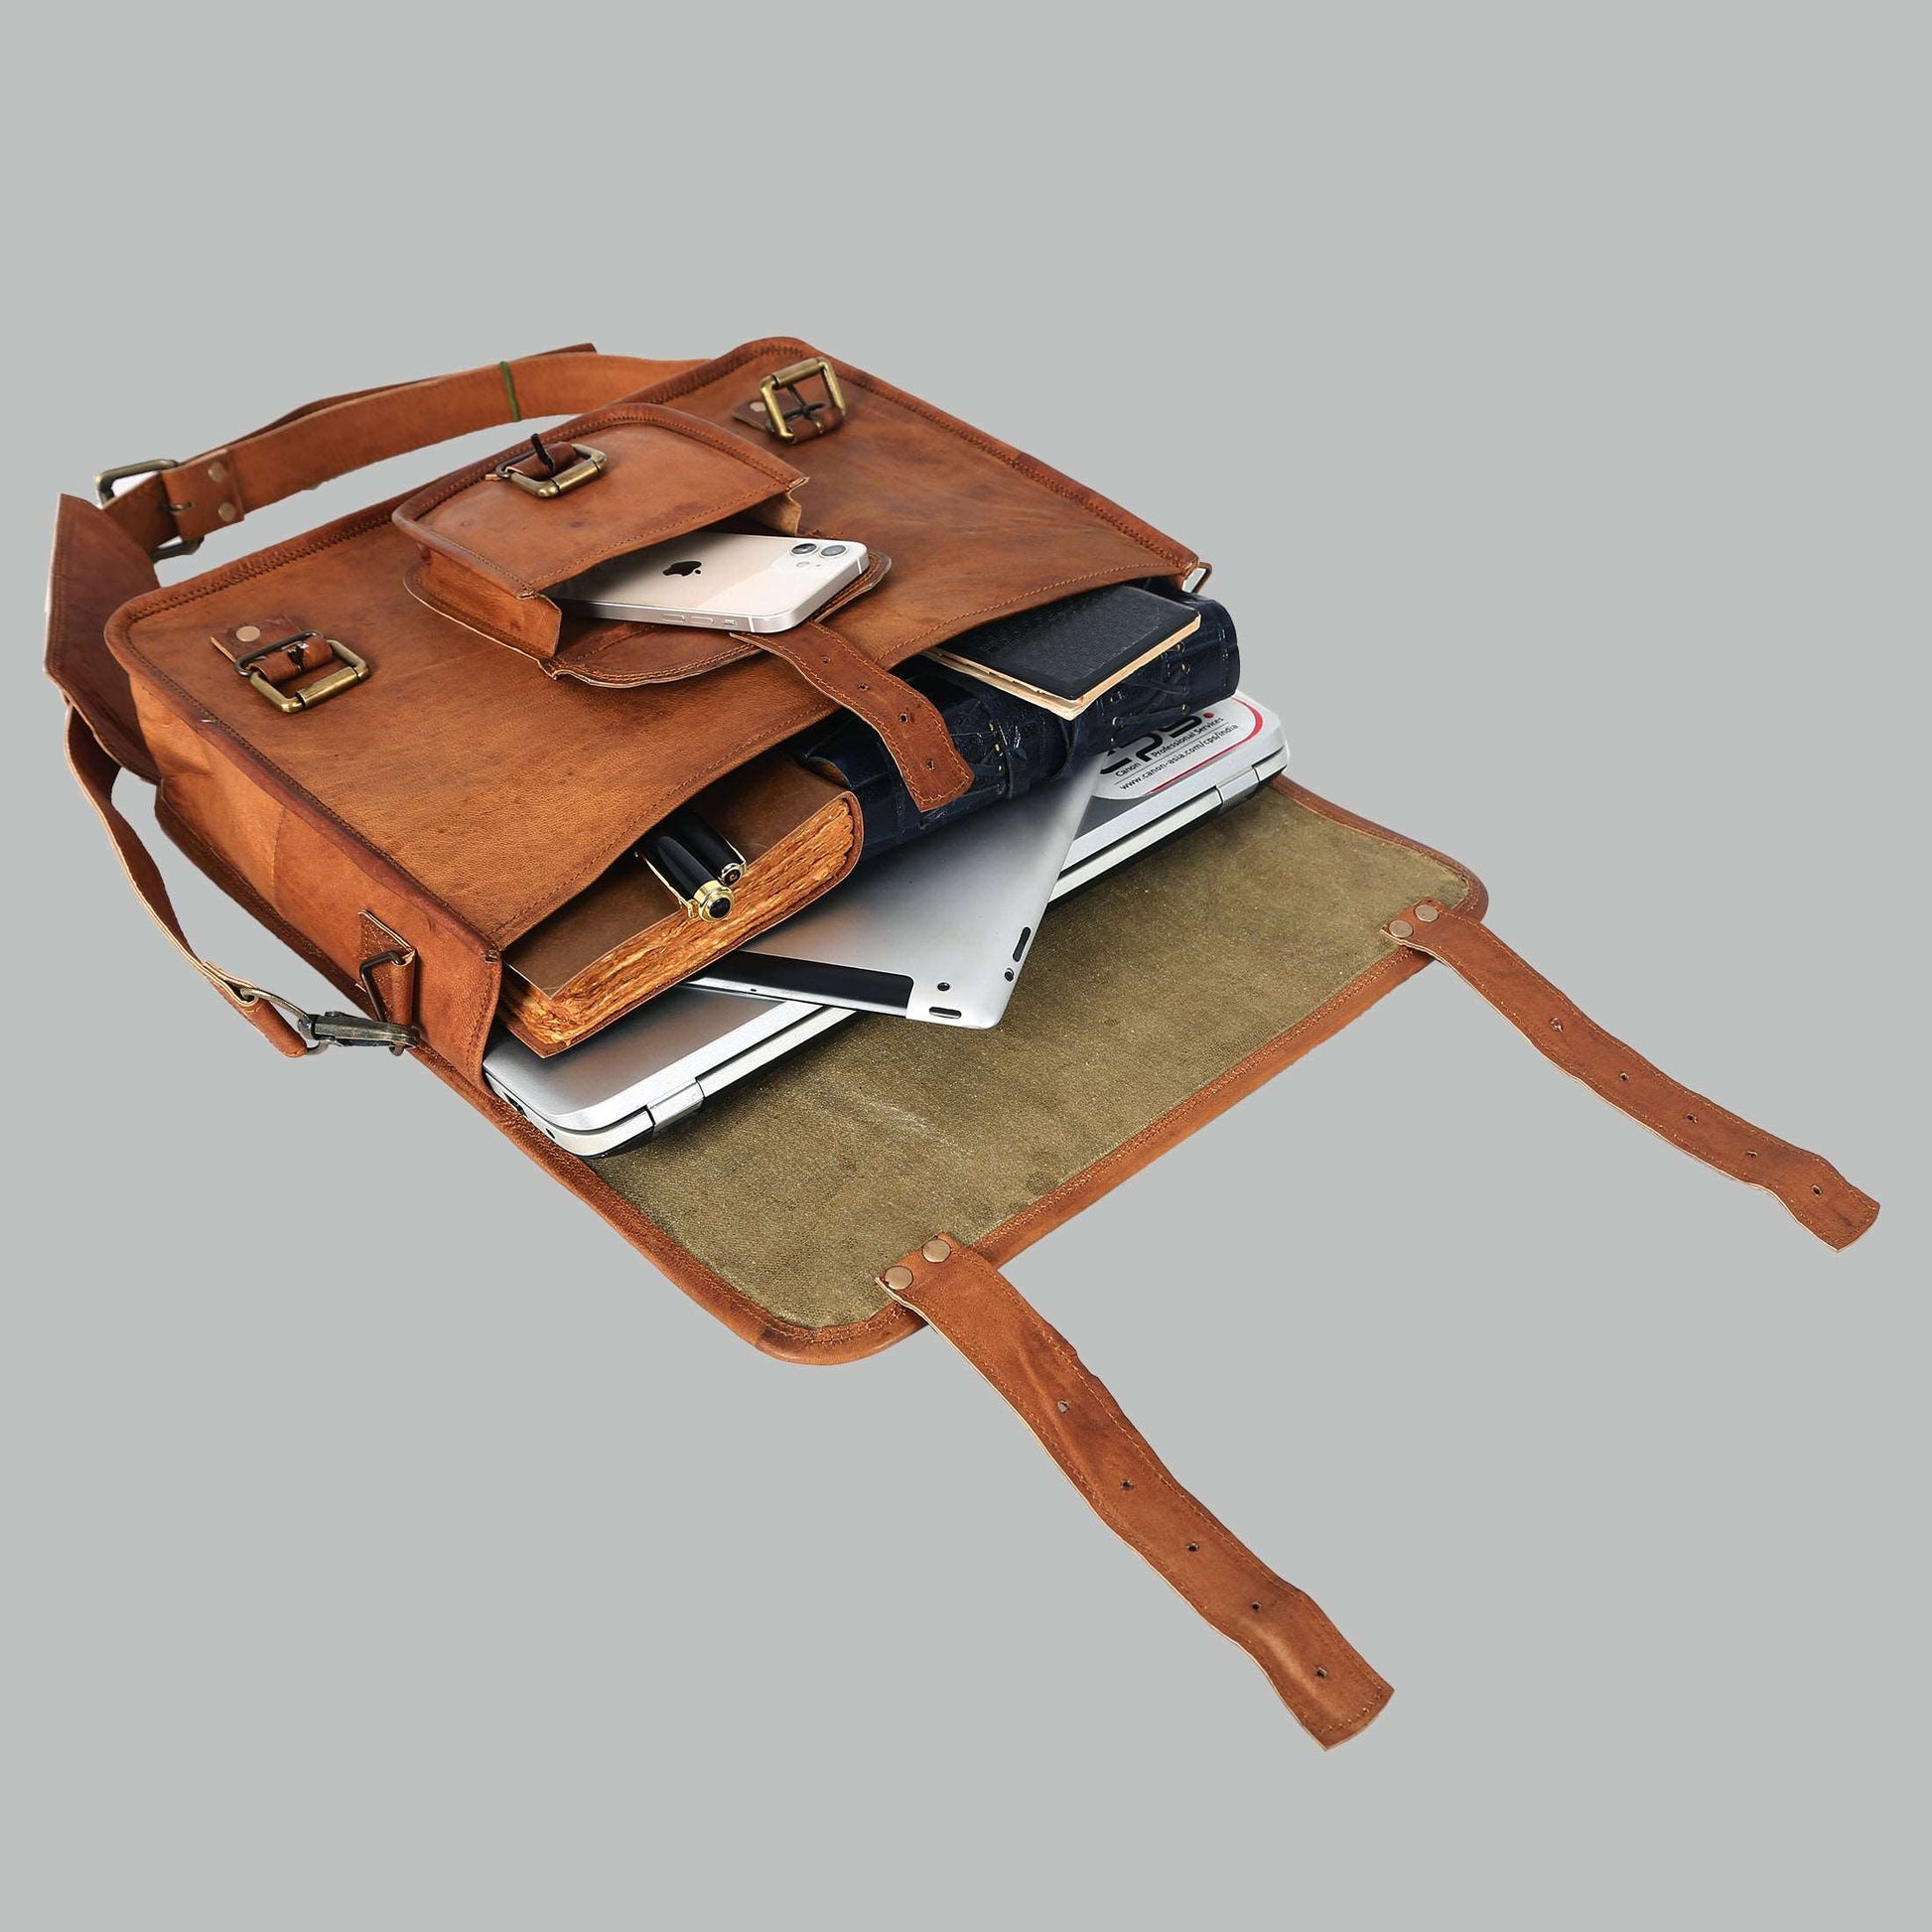 Leather Briefcase Laptop Messenger Bag Satchel Office computer bag for men and women